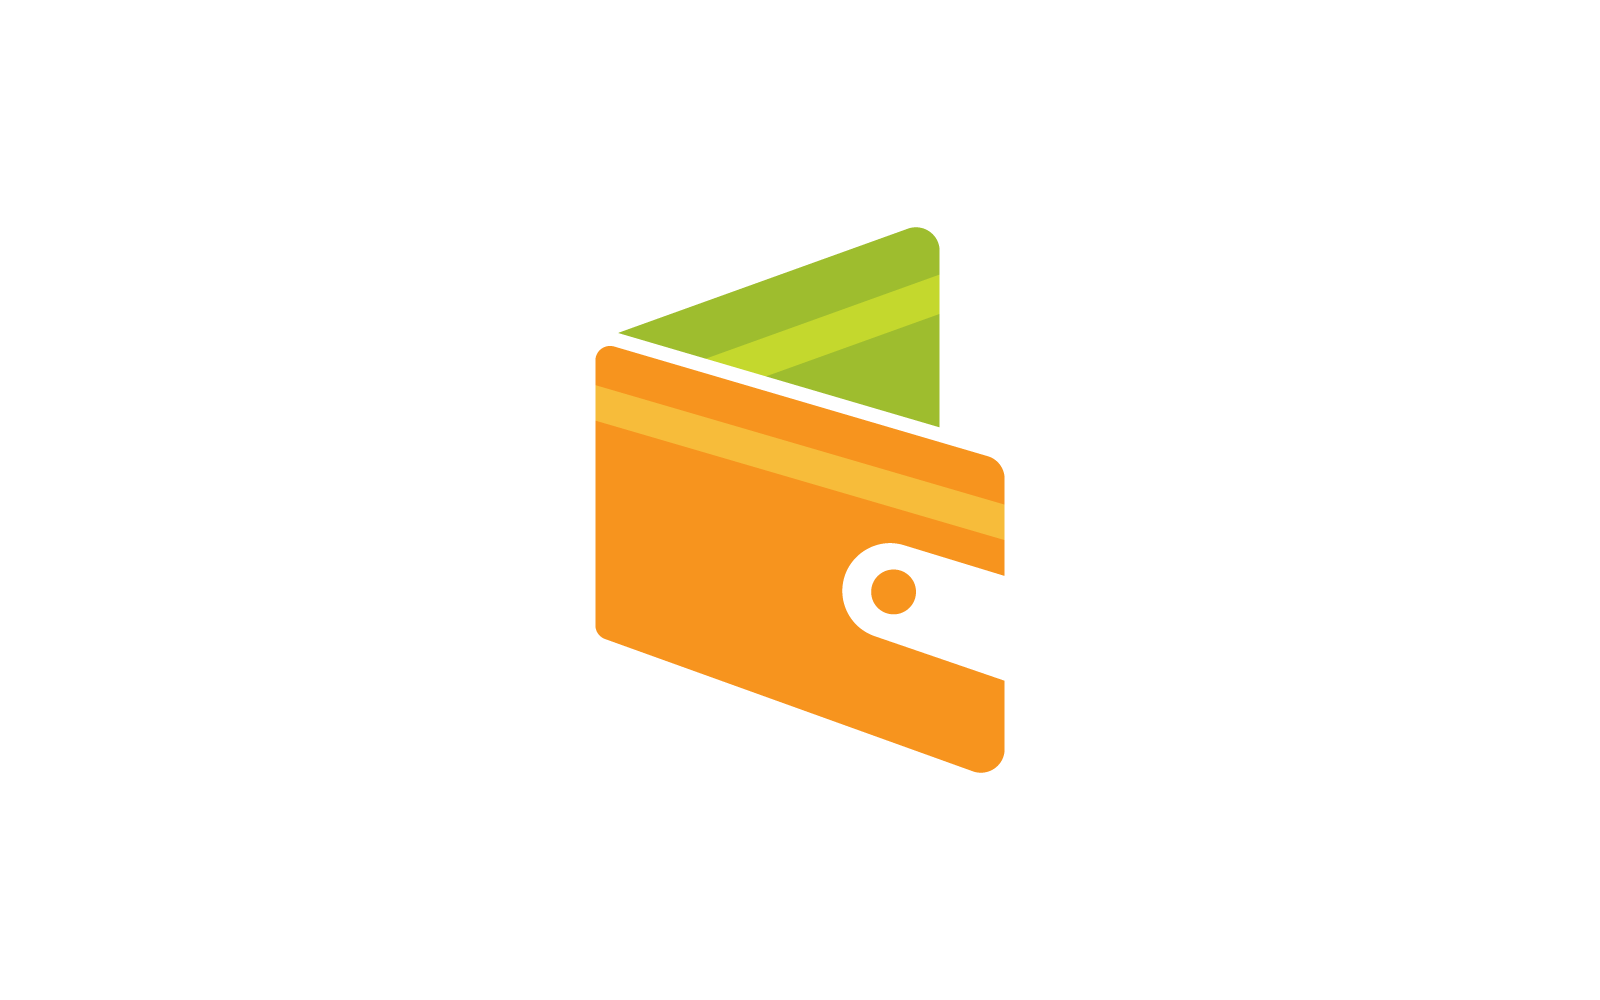 Wallet logo vector flat design